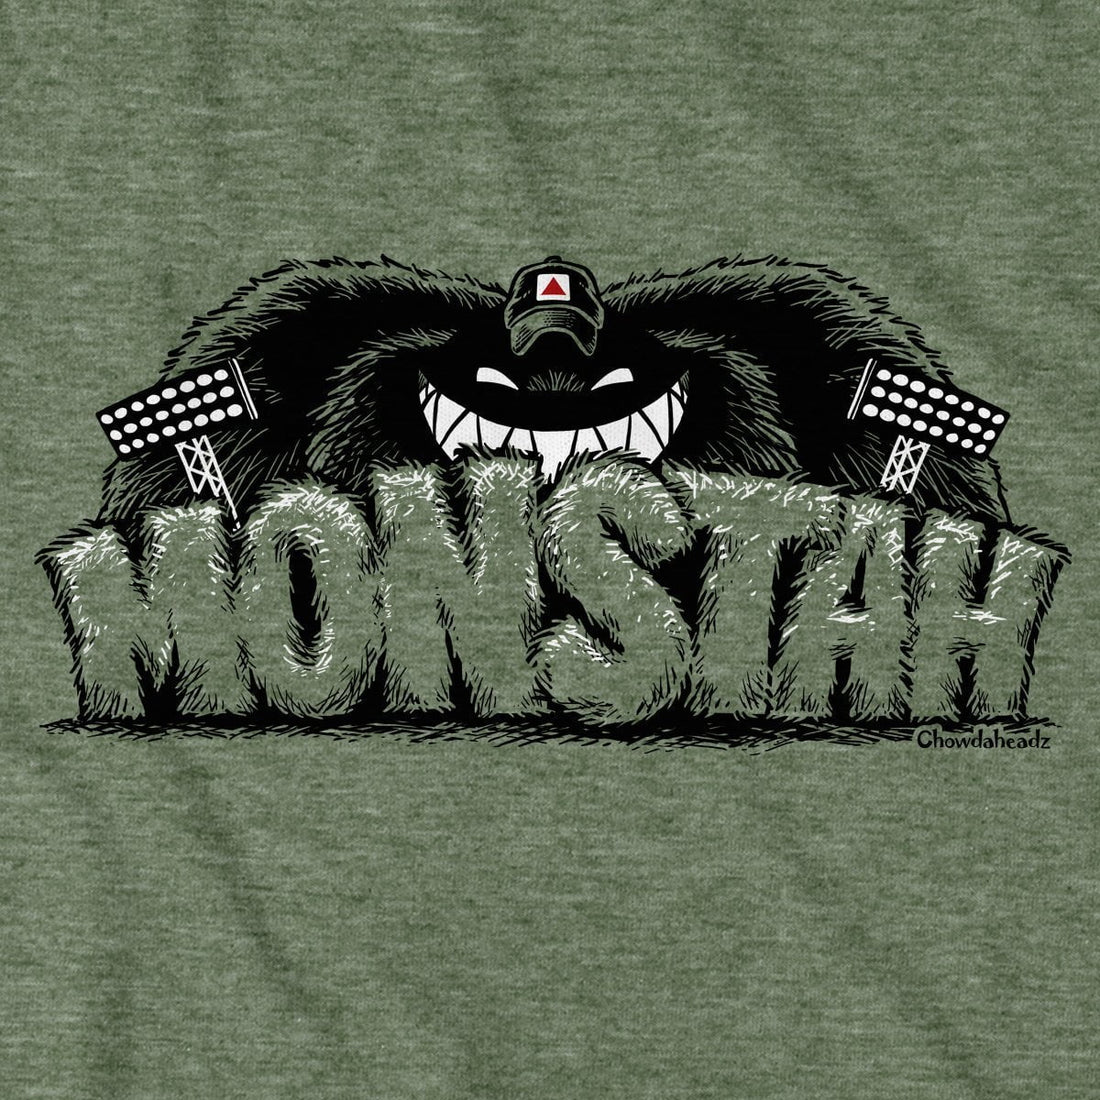 The Green Monster Monsta Fenway Park Boston Red Sox Tee Shirt 